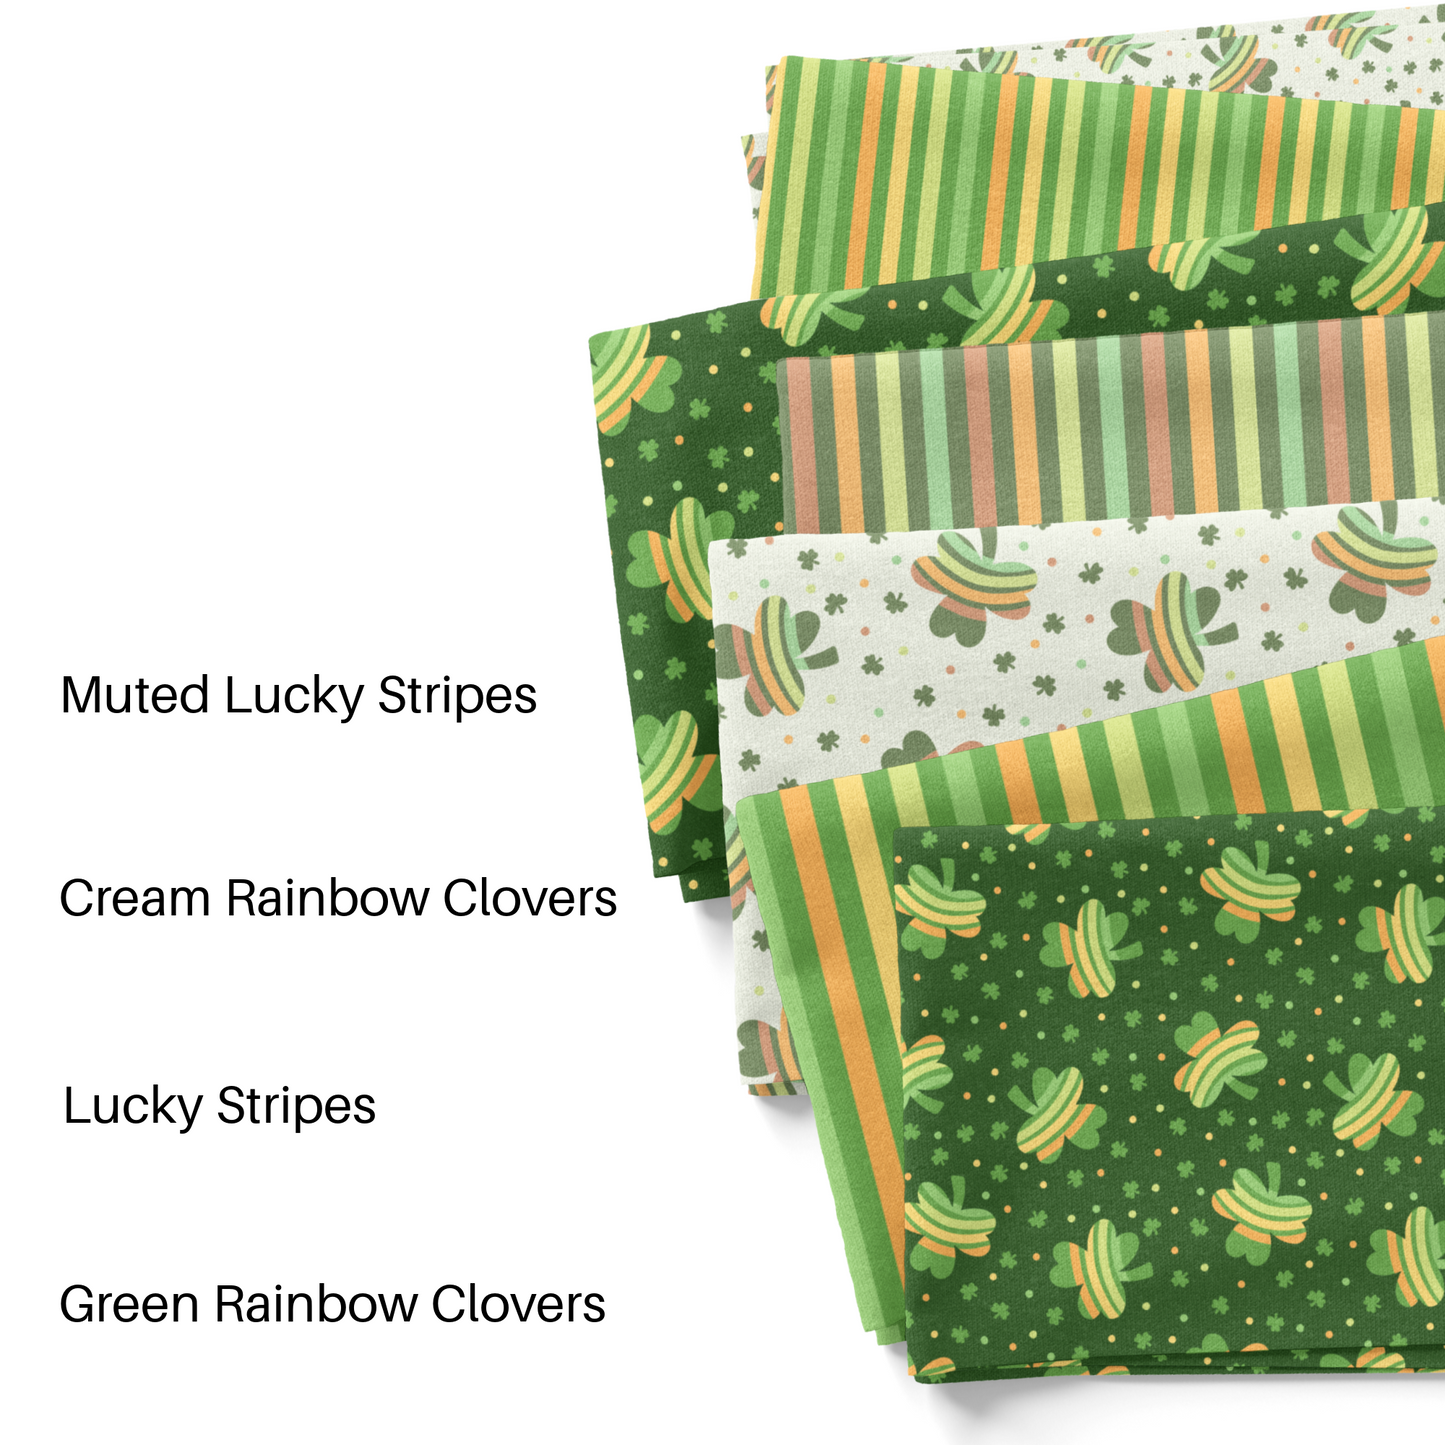 Cream Rainbow Clovers Fabric By The Yard